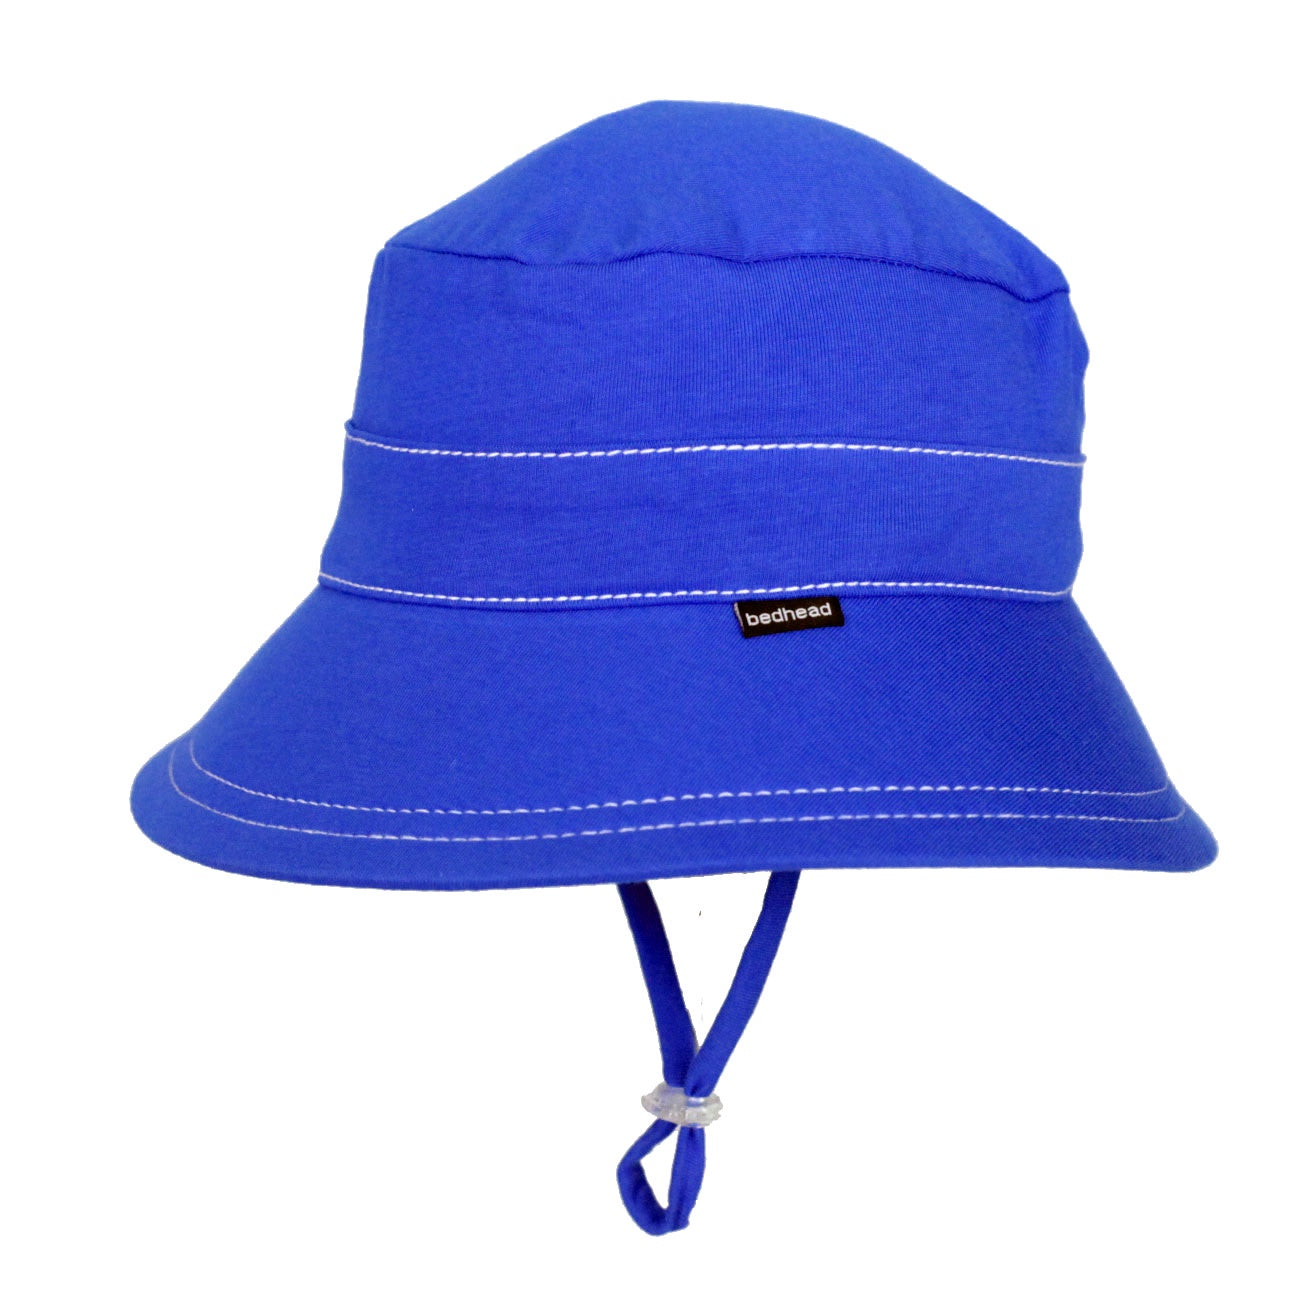 Bedhead - Kids Bucket Hat - Bright Blue